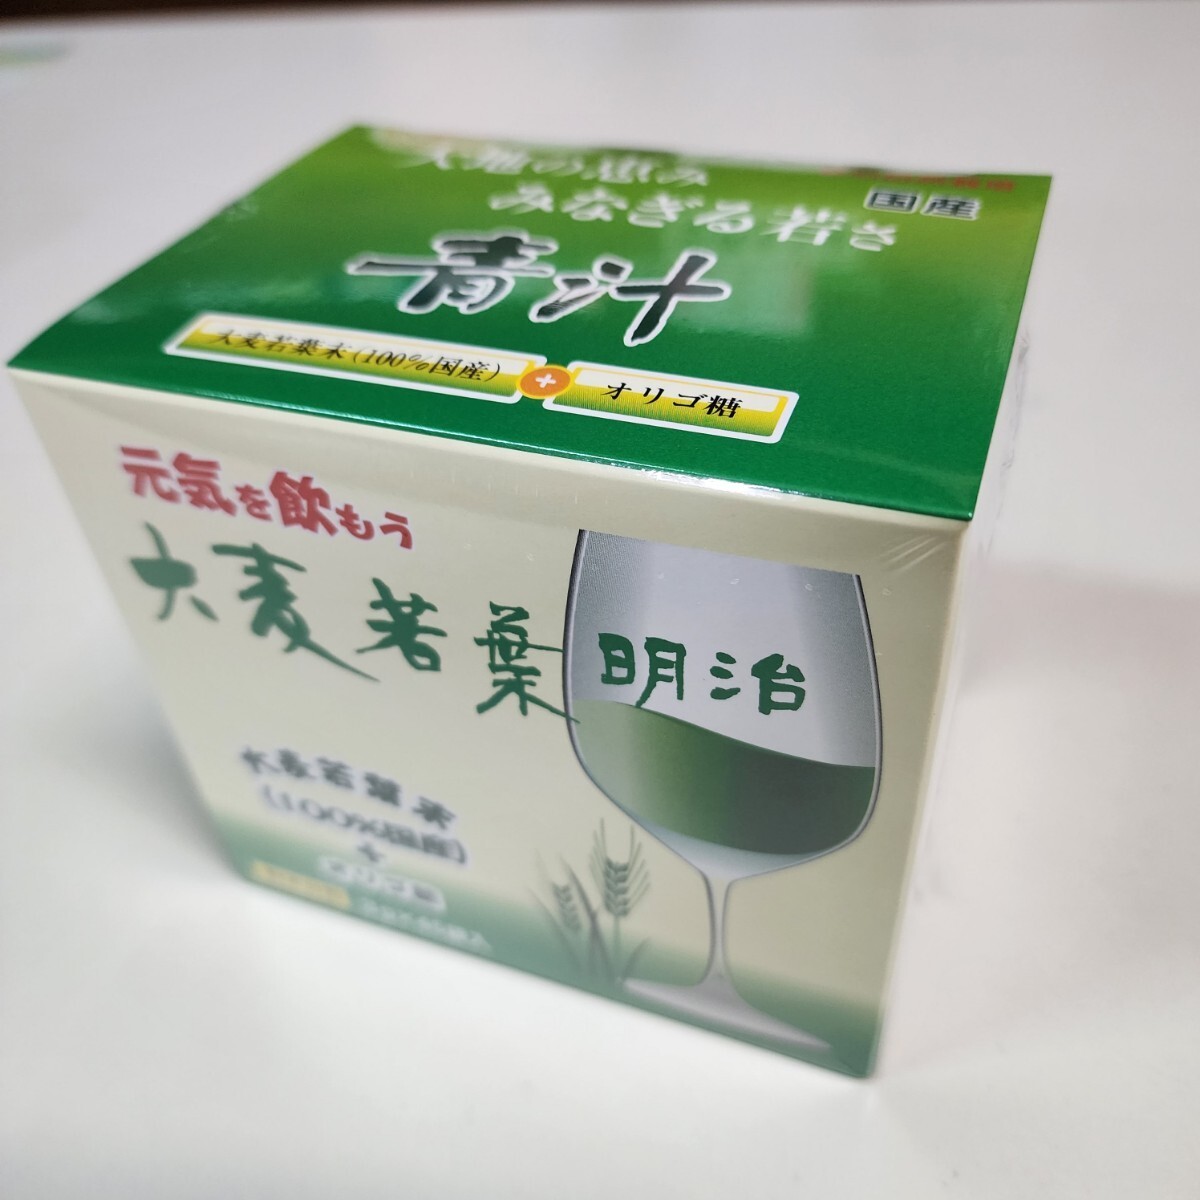  barley . leaf green juice health maintenance food 3g 45 sack entering oligo sugar Meiji Seika 